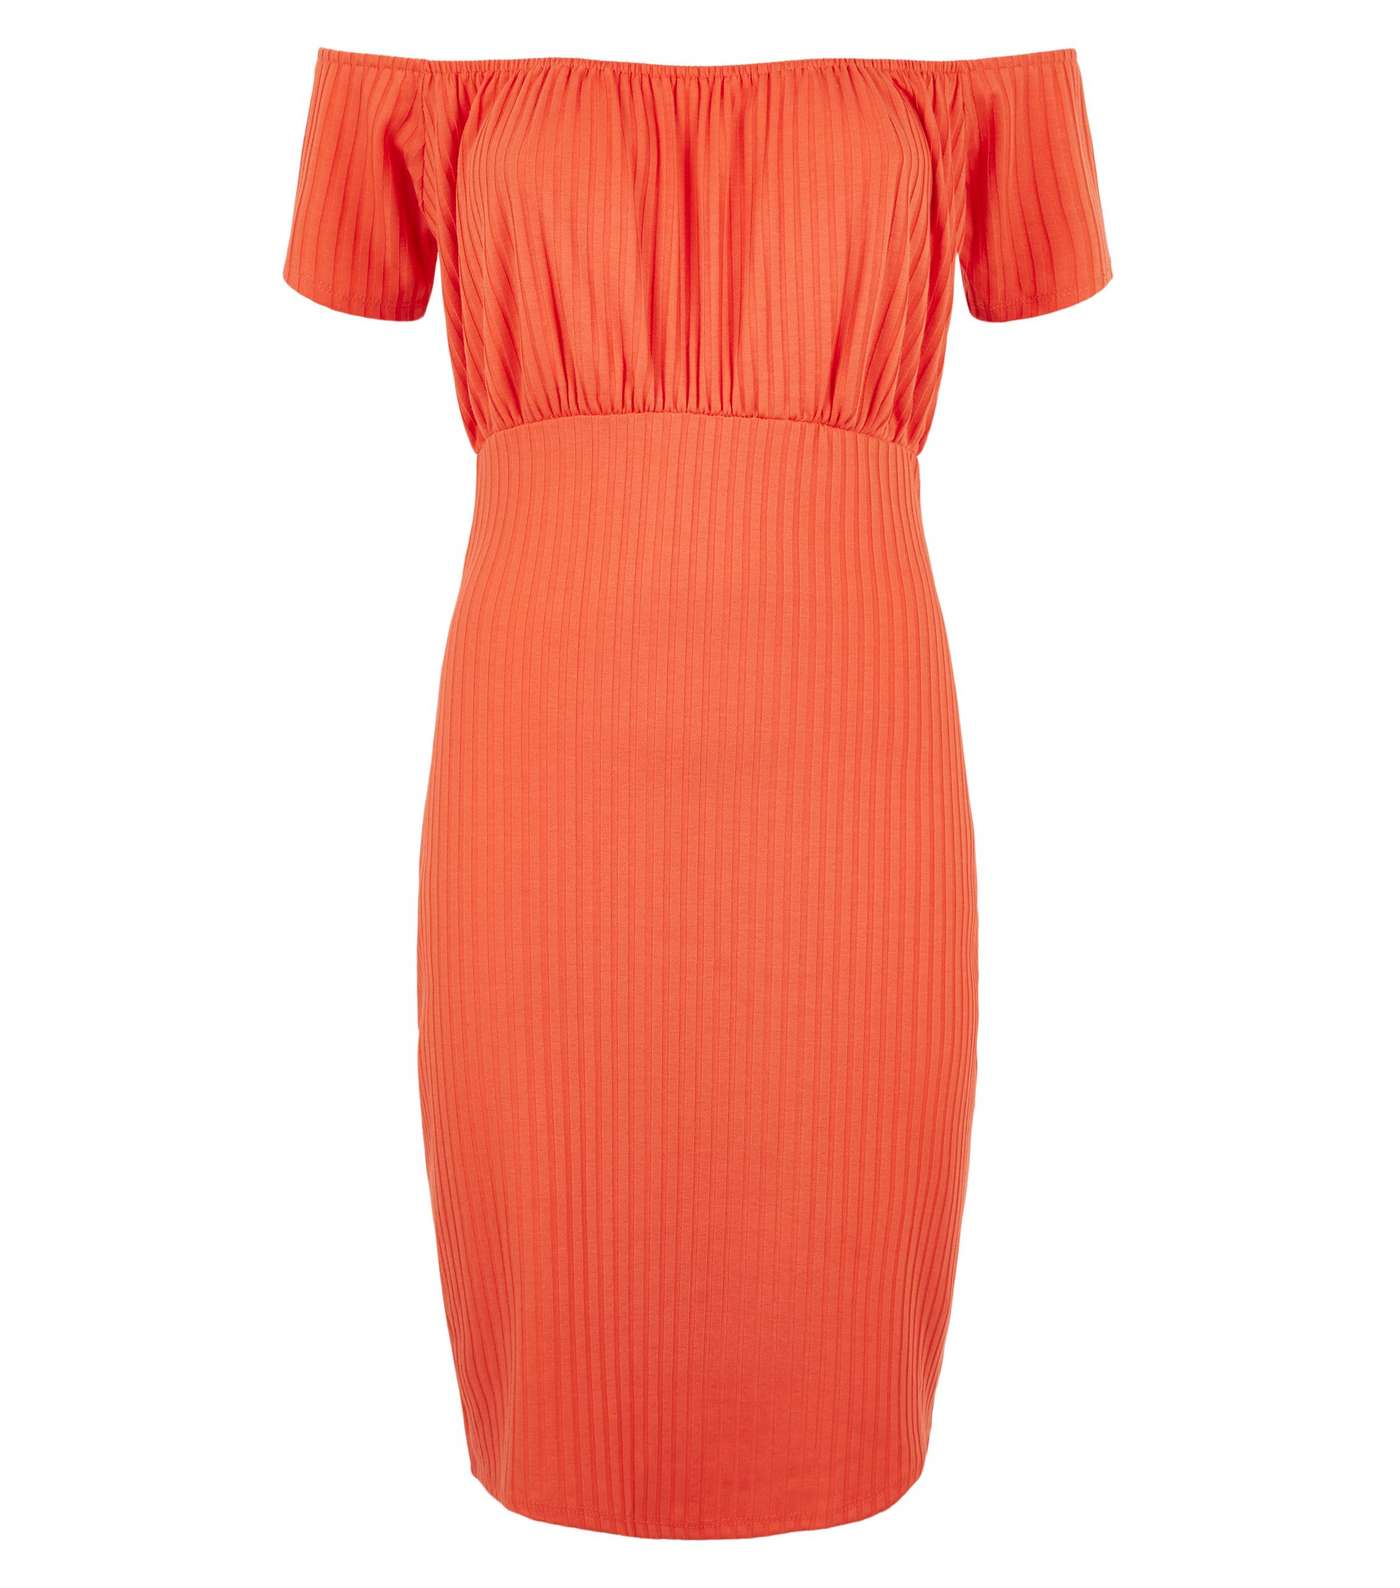 Apricot Bright Orange Ribbed Bardot Dress Image 4